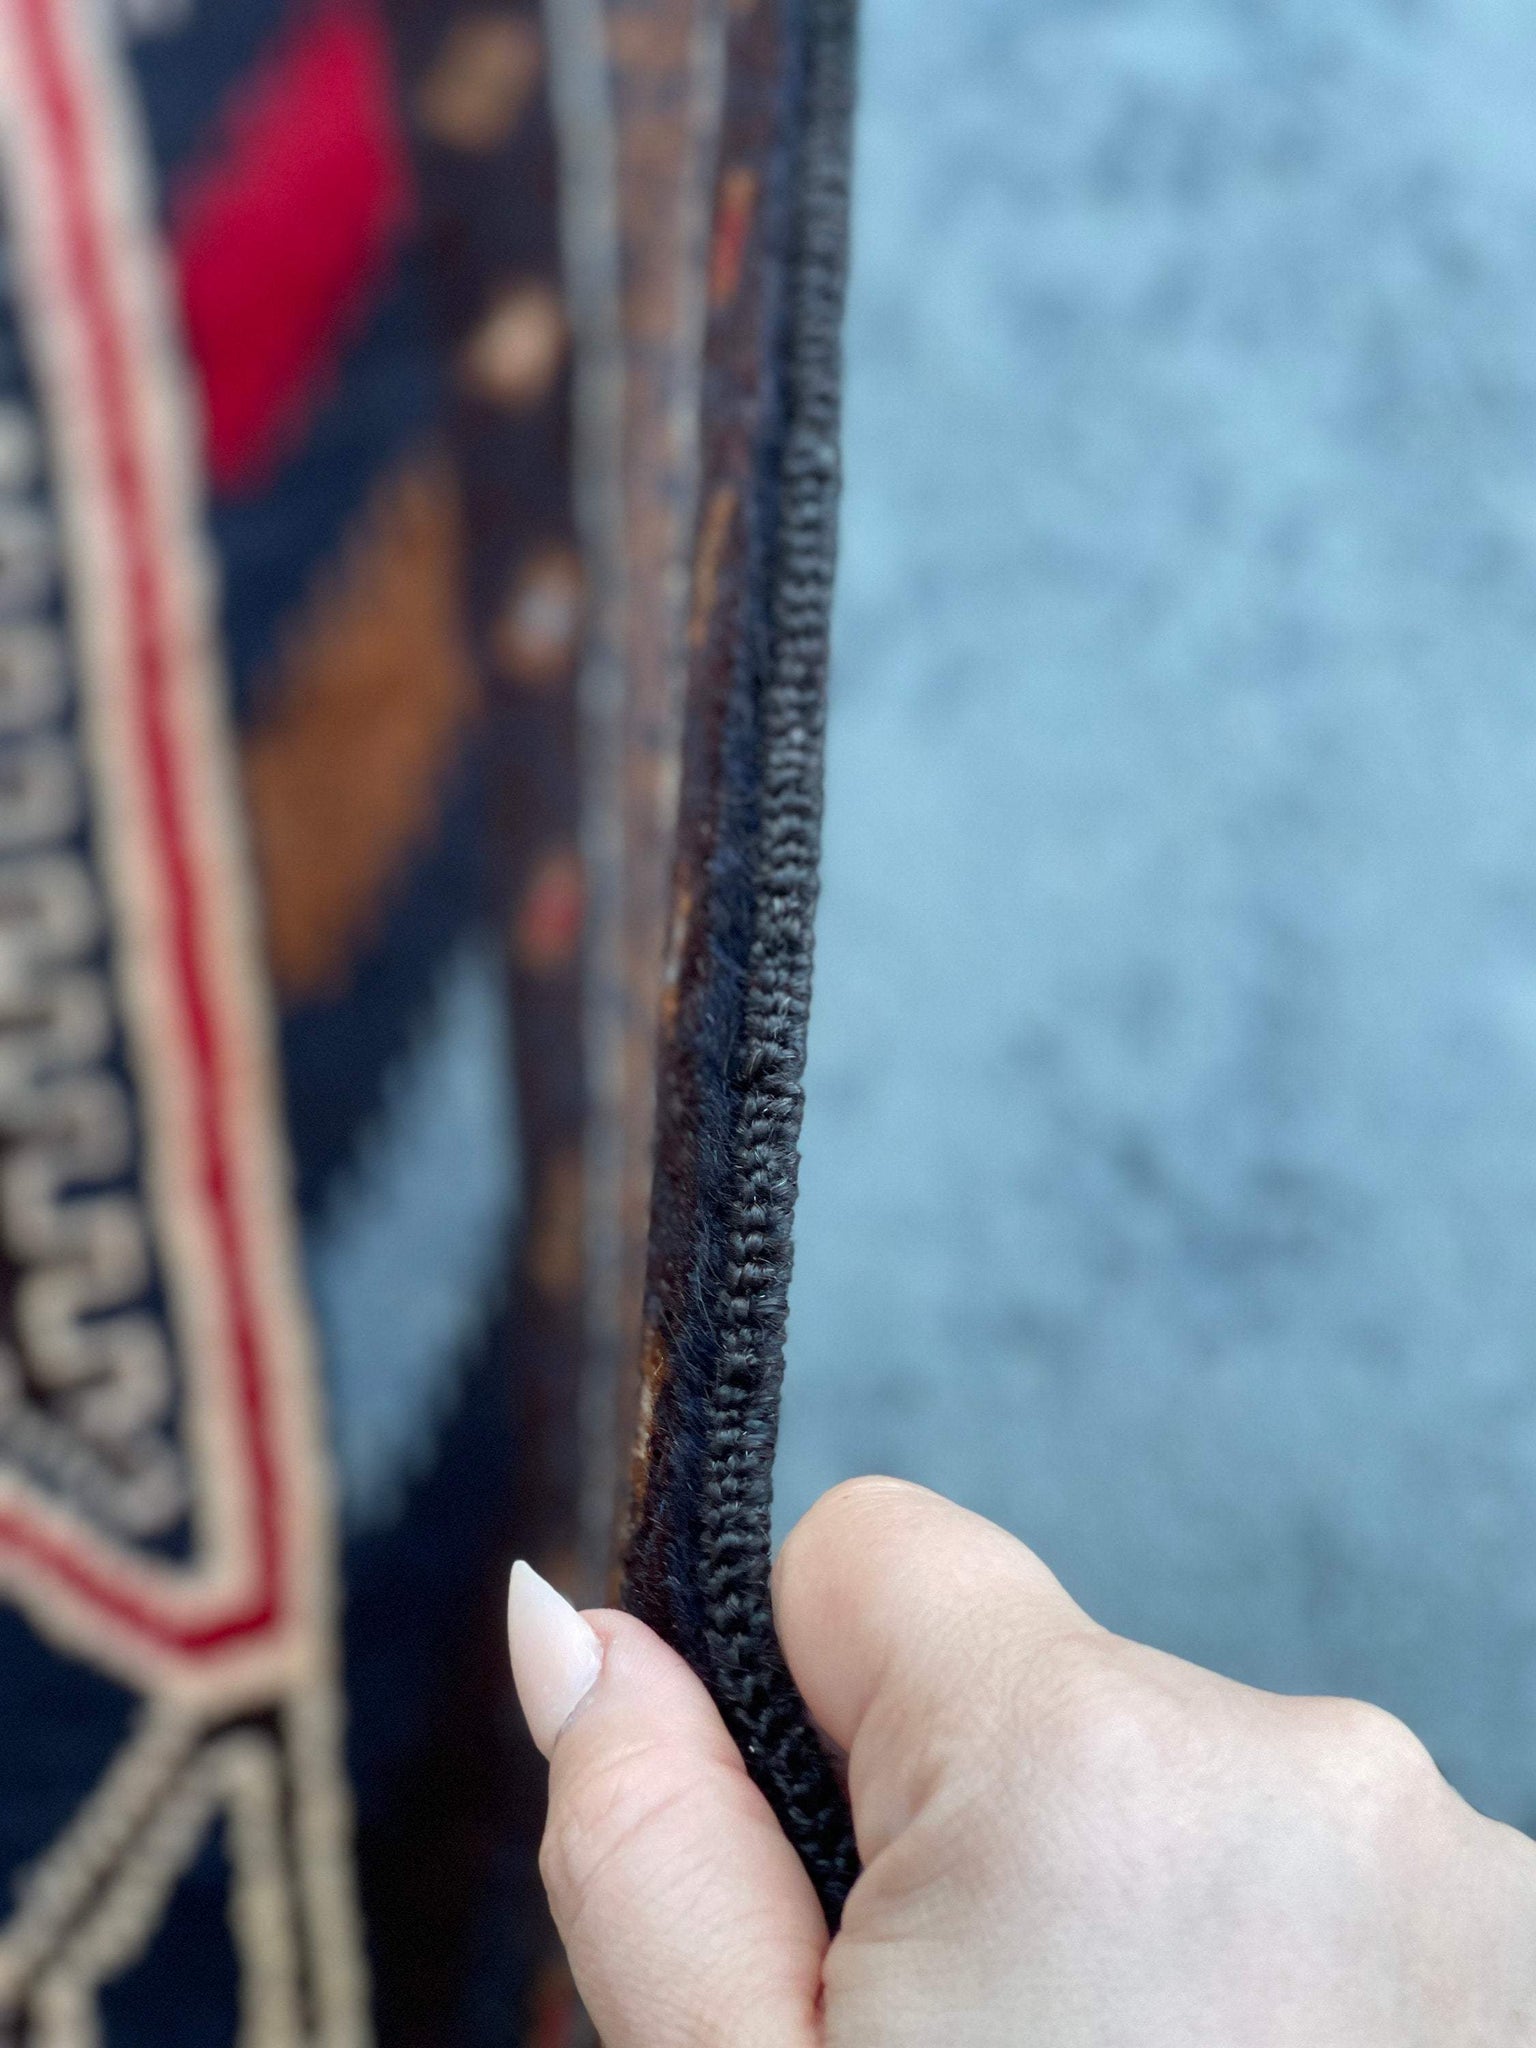 4x7 Handmade Vintage Afghan Rug Turkish Rug Authentic Rug Decorative Area Rug Bedroom Boho Rug Oriental Rug Tribal Rug